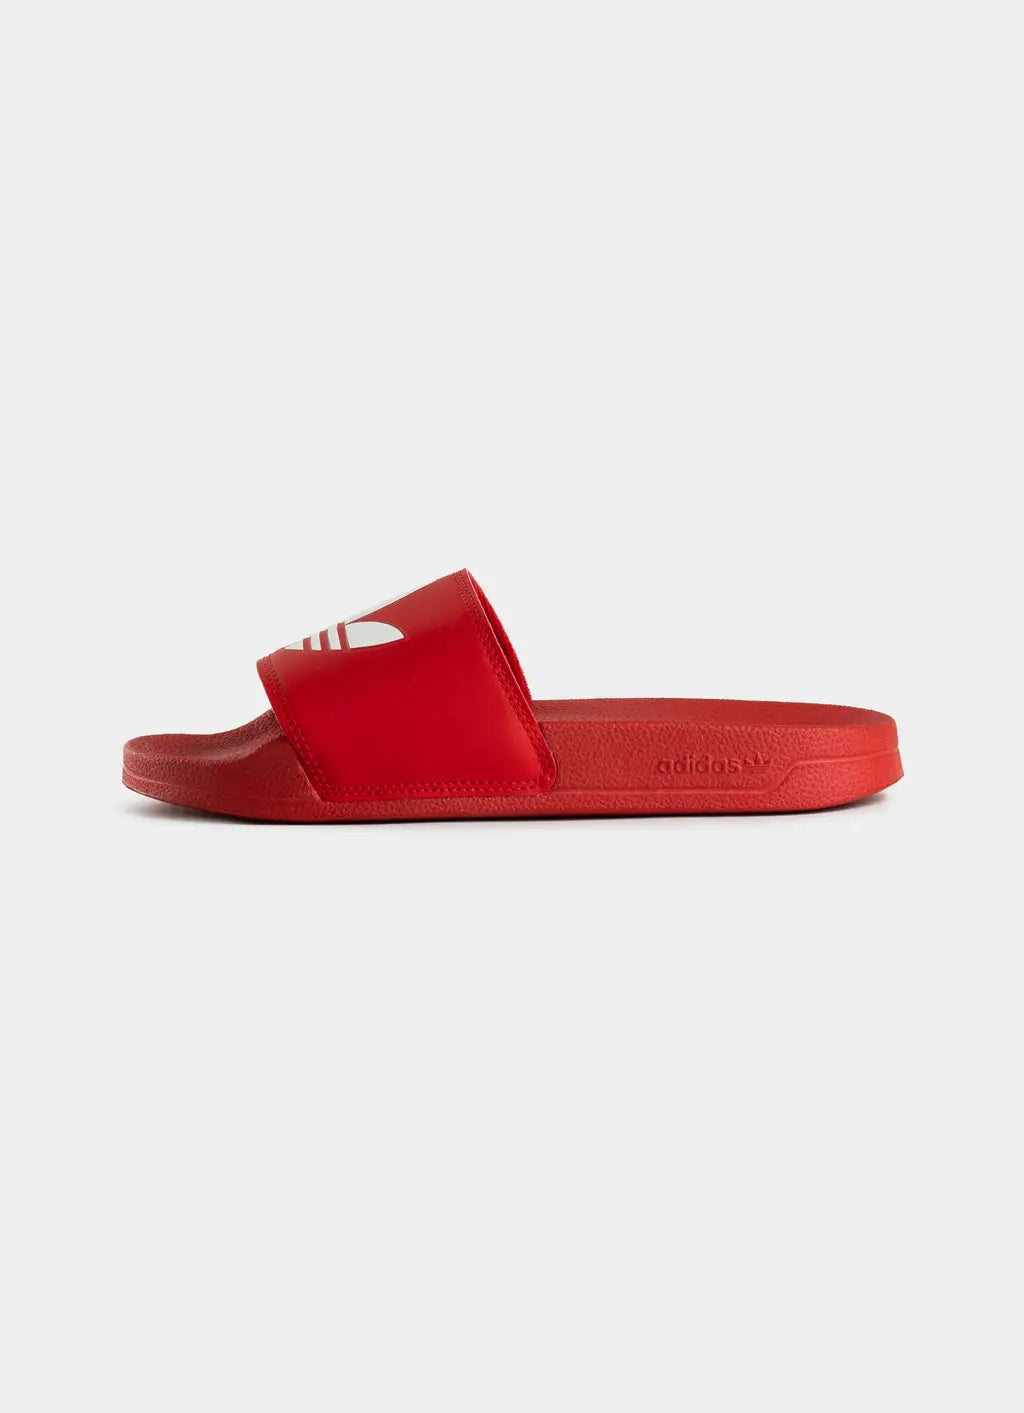 .Adidas Originals Adilette Slides/Jandals - Unisex - Red/White - (FU8296) - LAL - R2L14